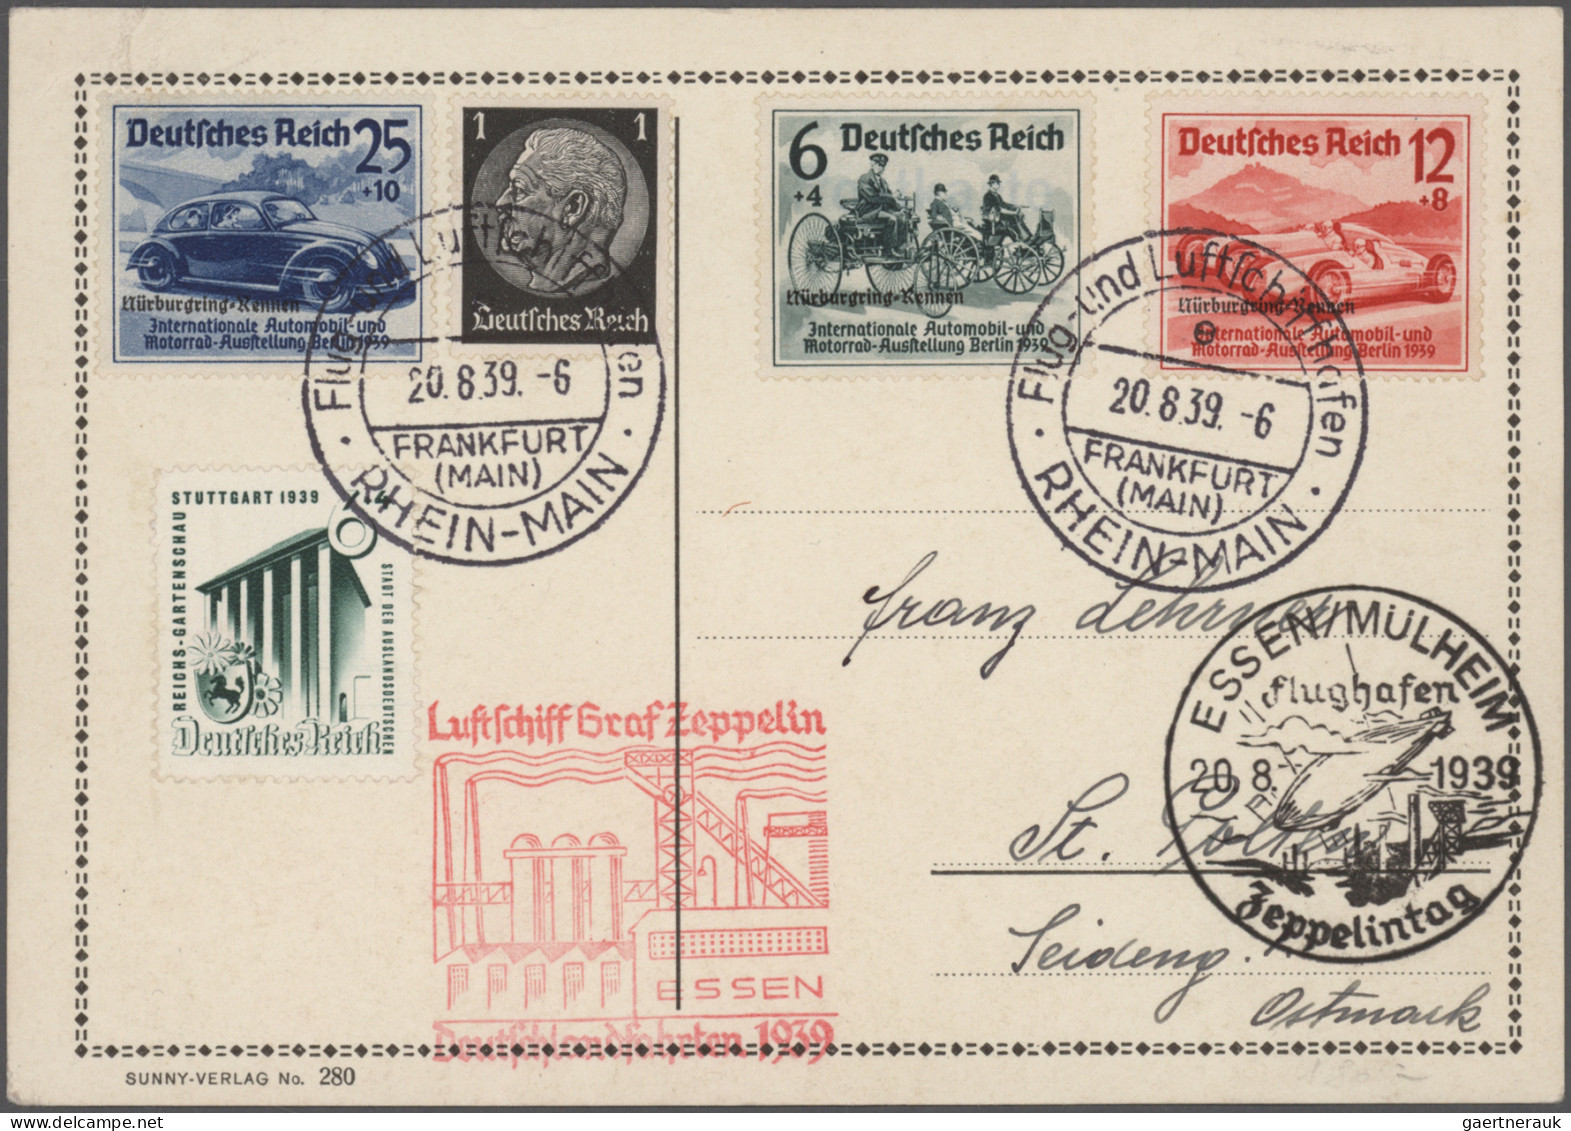 Zeppelin Mail - Germany: 1929/1939 (ca): Konvolut von knapp 100 Belegen mit gute